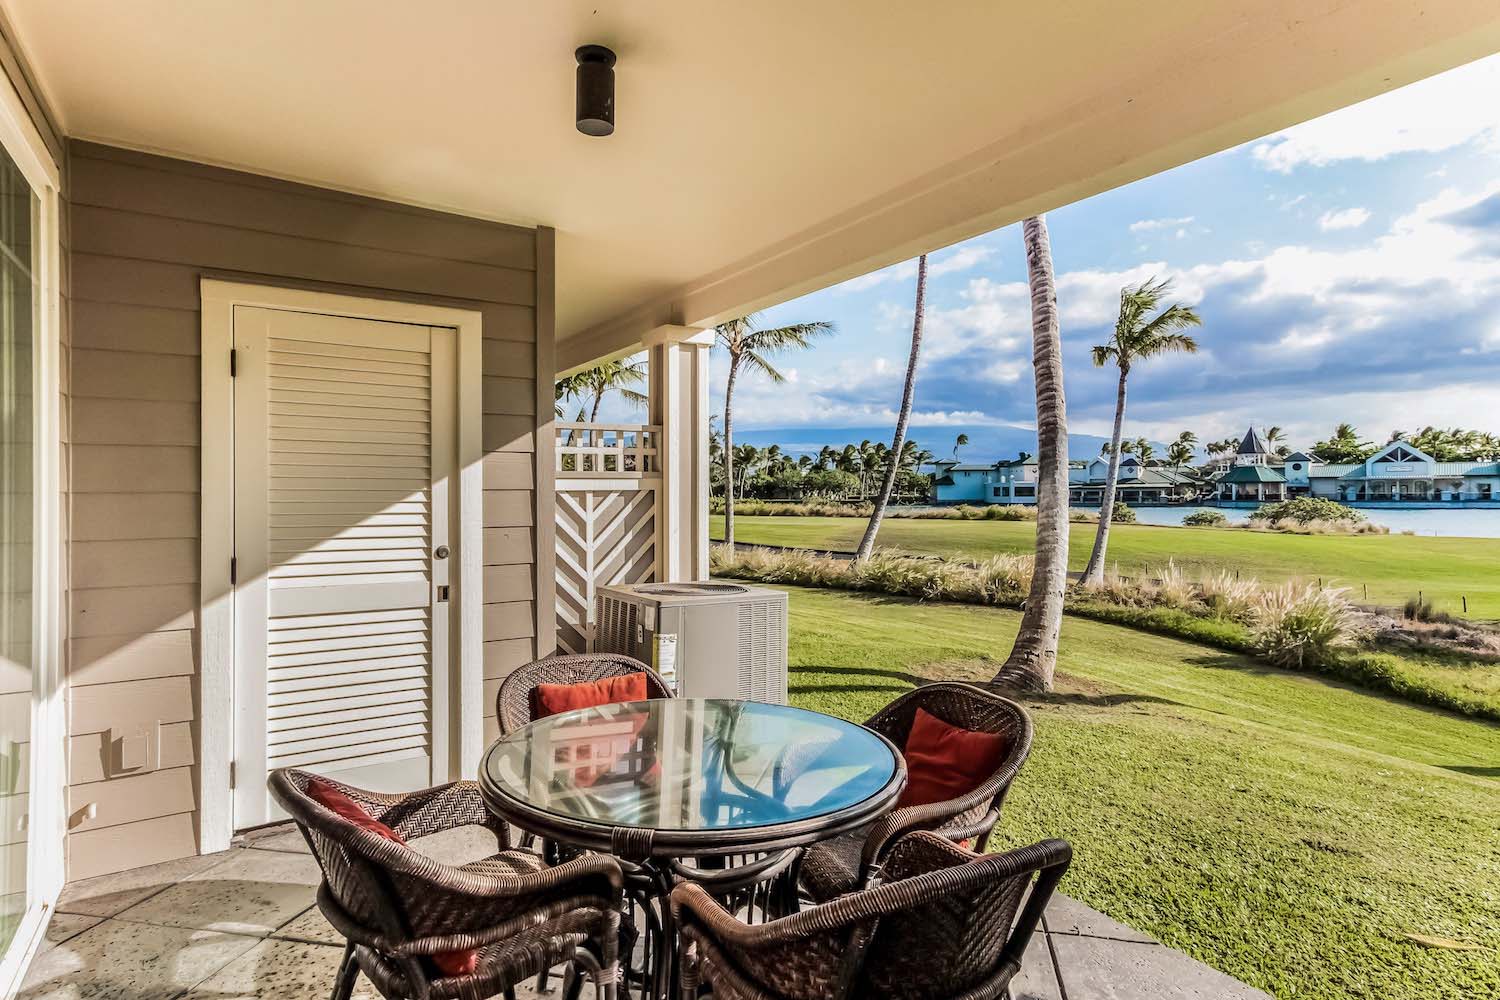 Fairway Villas M3 at the Waikoloa Beach Resort